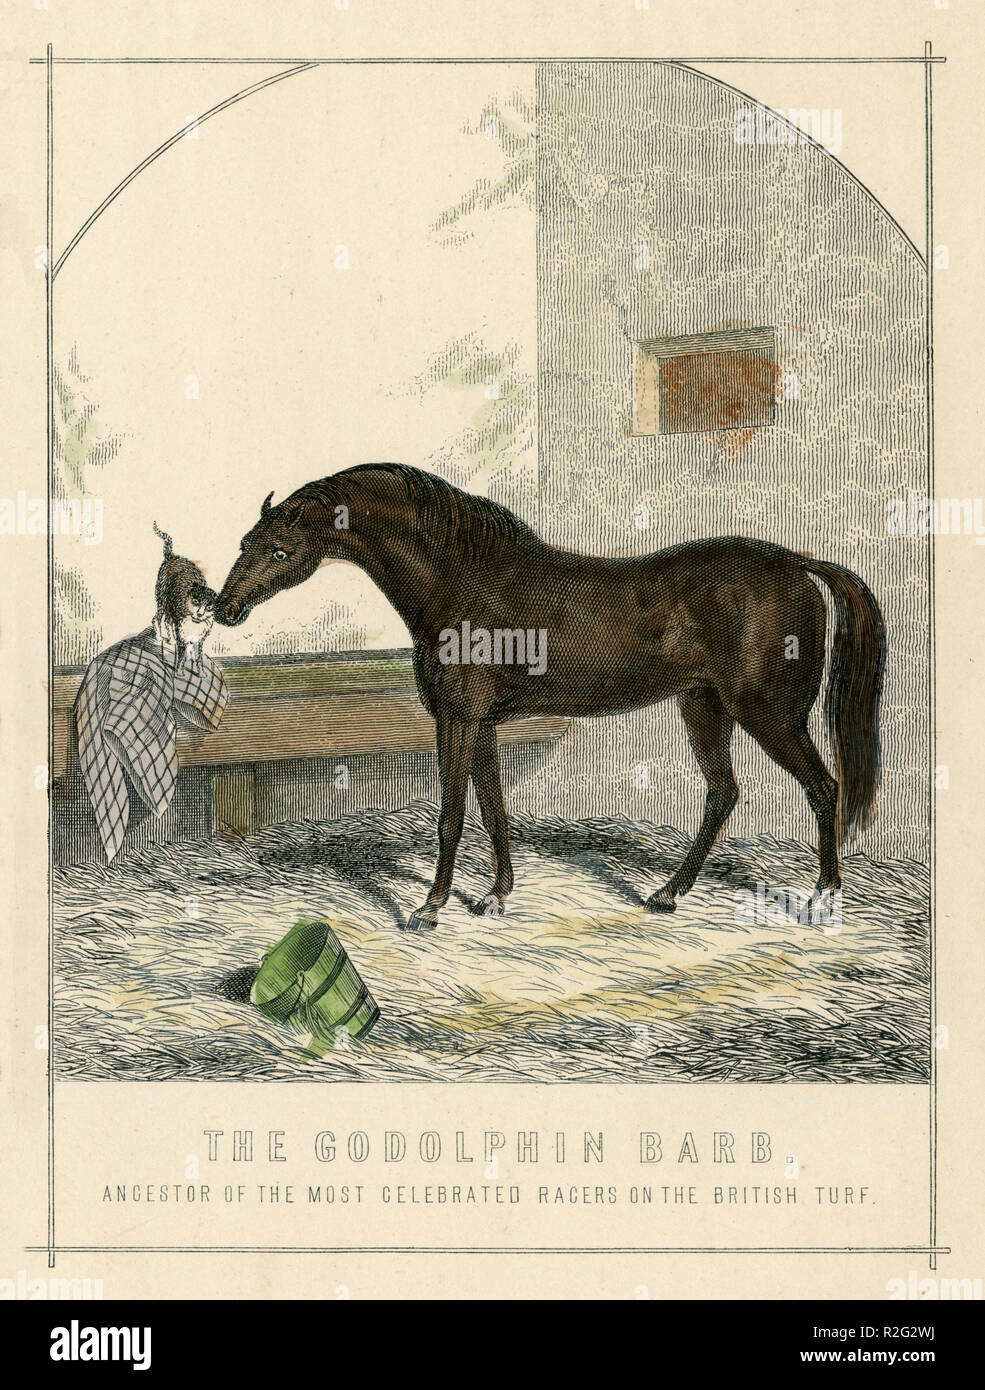 Arabian horse: Godolphin Arabian oder Godolphin Barb (* ca. 1724/1725; † Dezember 1753), stallion, 'The Godolphin Barb. Ancestor of the most celebrated racers on the british turf.', William Mackenzie Stock Photo